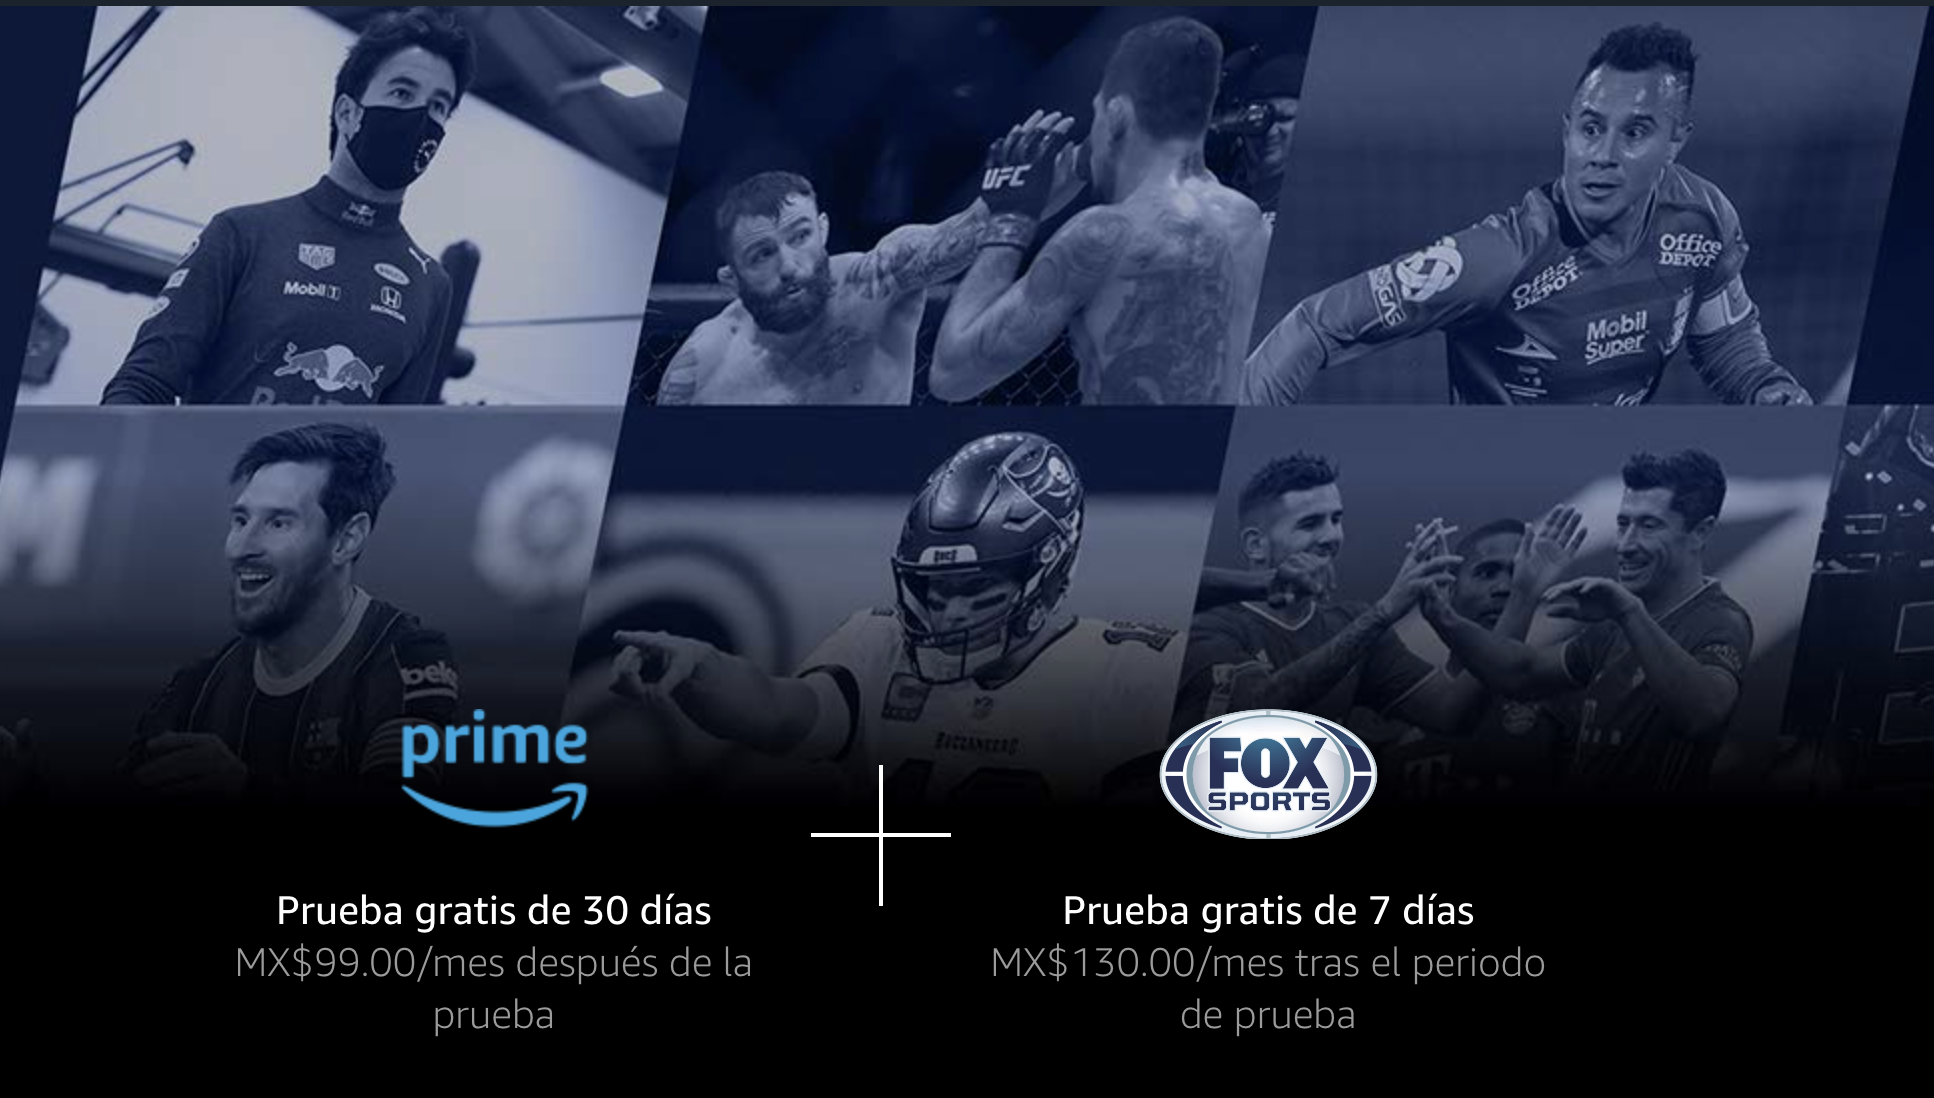 ¿Qué plataformas tiene Fox Sports Premium